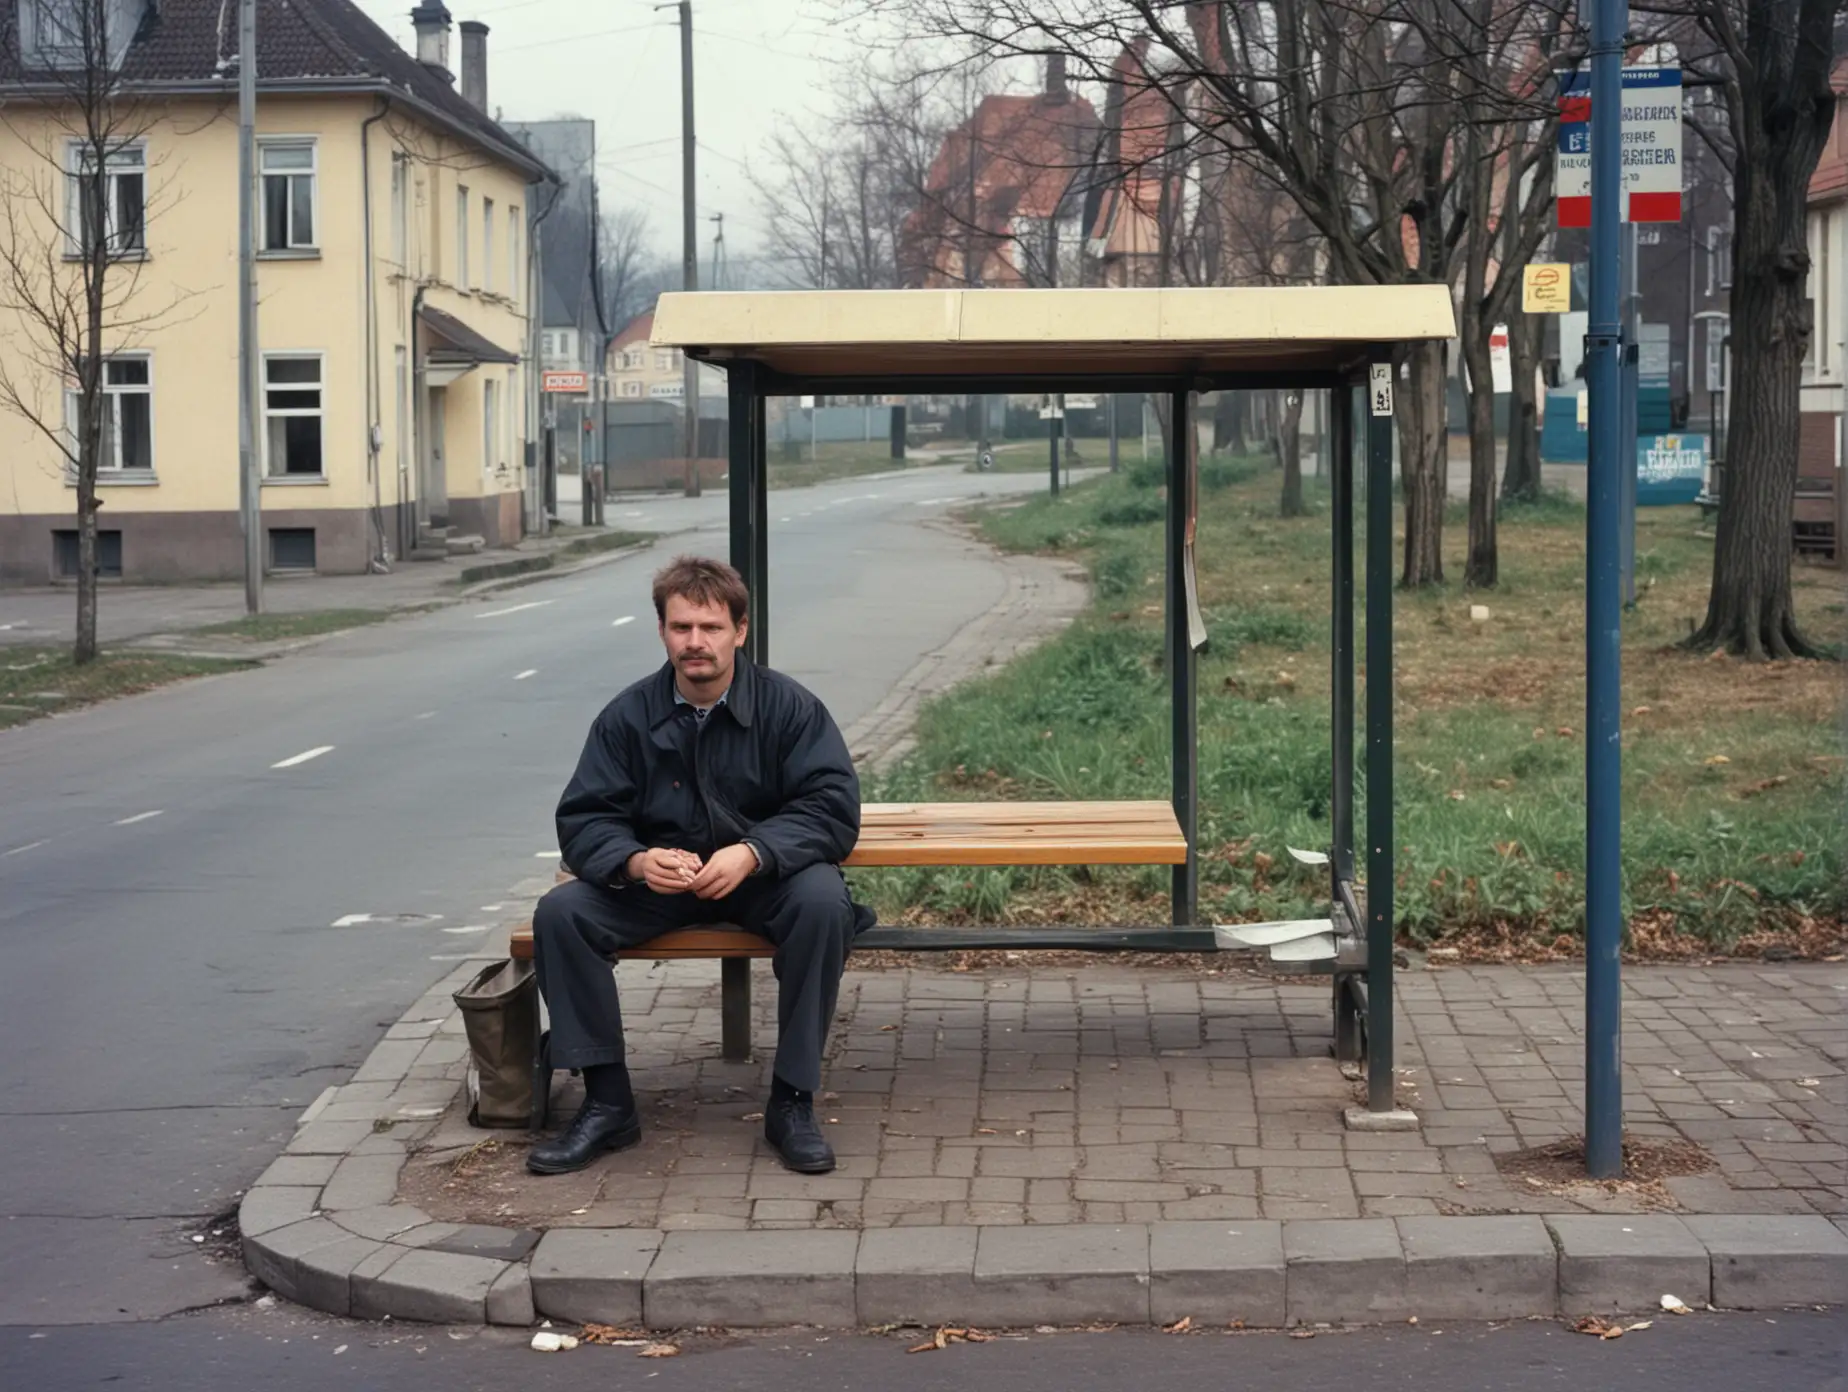 Solitary Figure at East German Village Bus Stop 1992